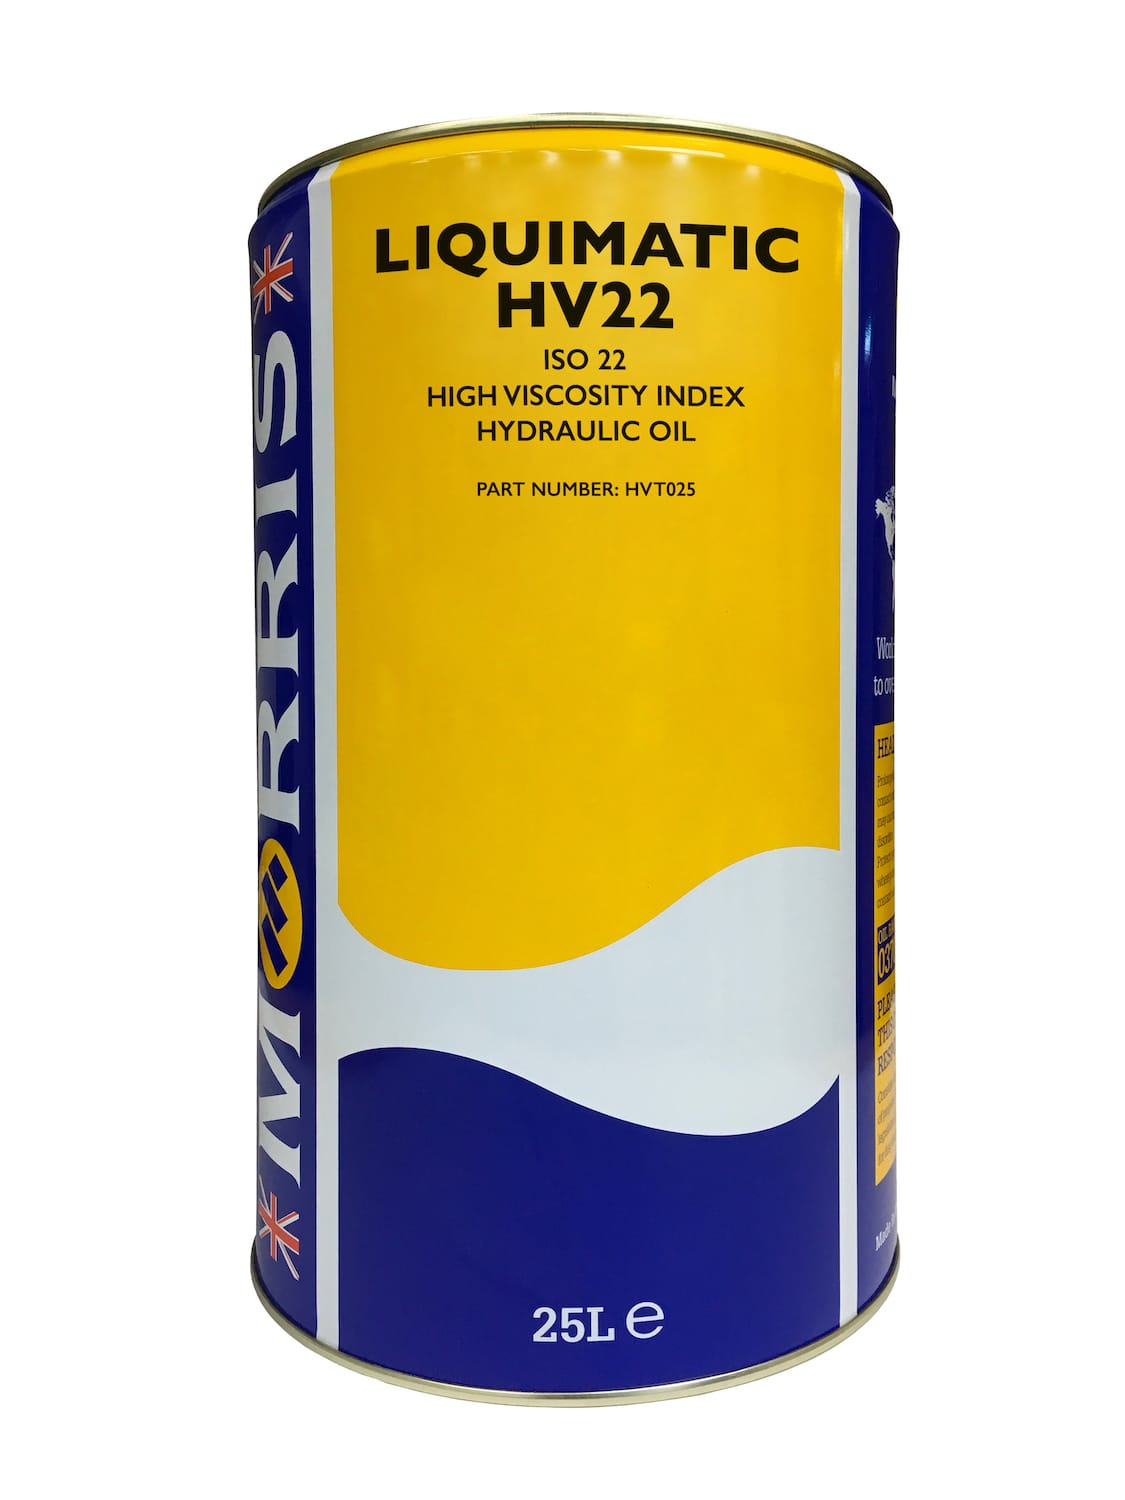 Liquimatic HV22